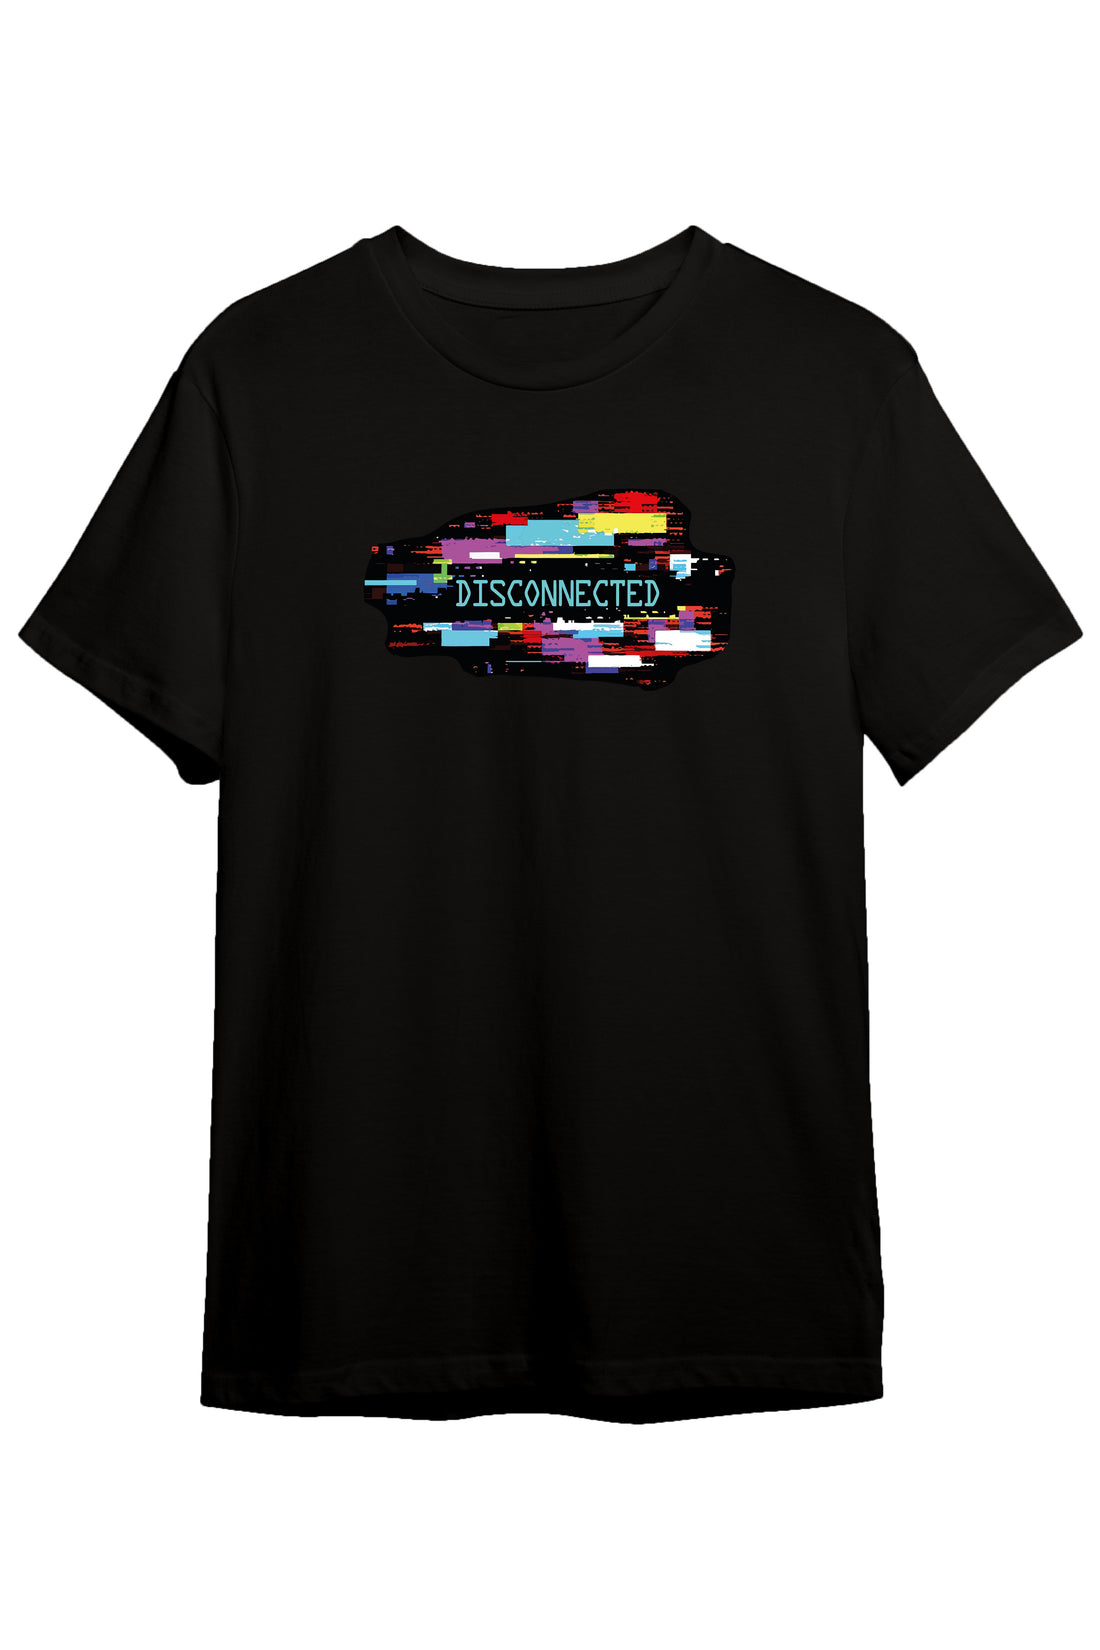 Disconnected - Regular Tshirt